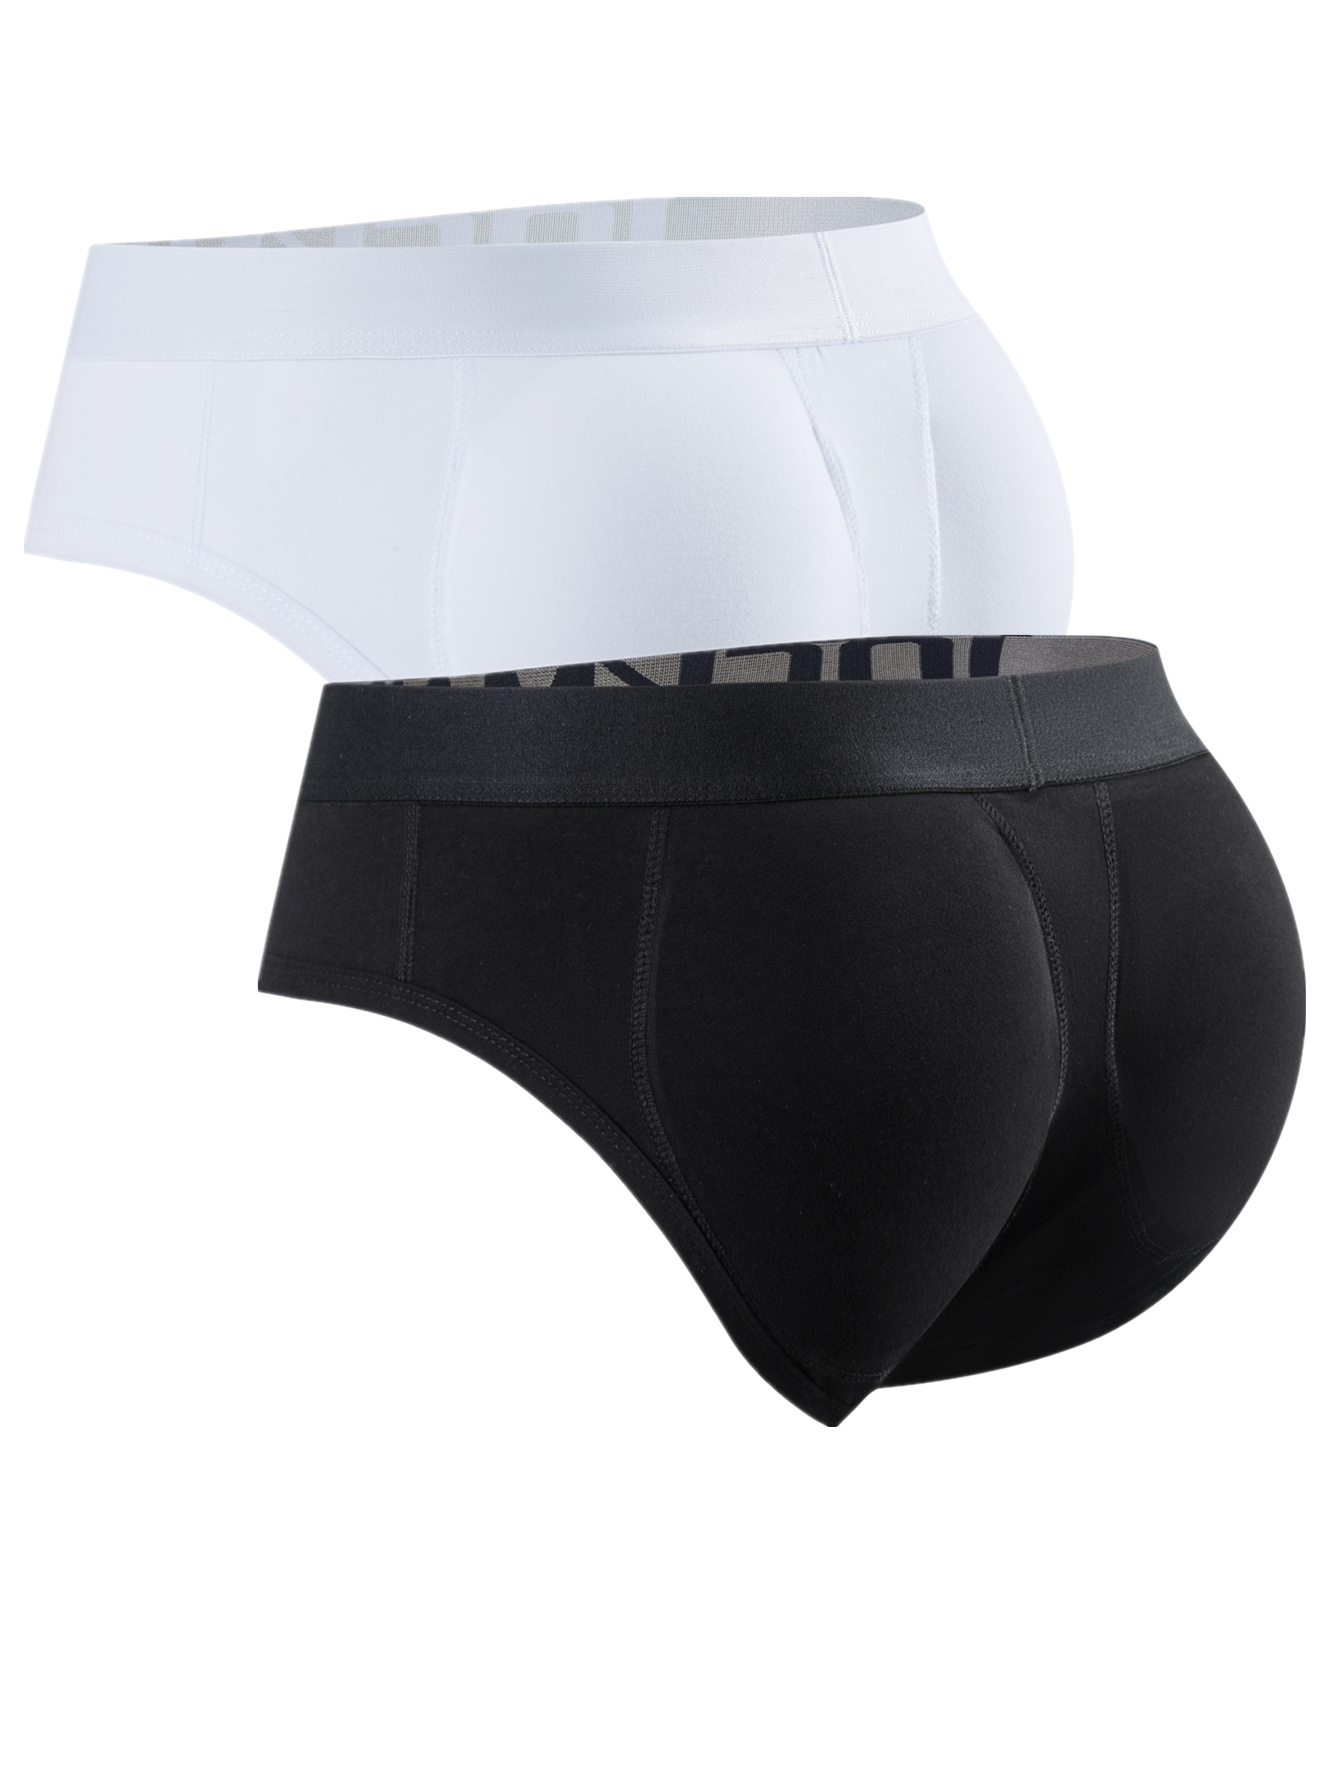 Hip Shaper Padded Briefs Butt Pad Sexy Men Underwear Shaper Panties  Underpants 